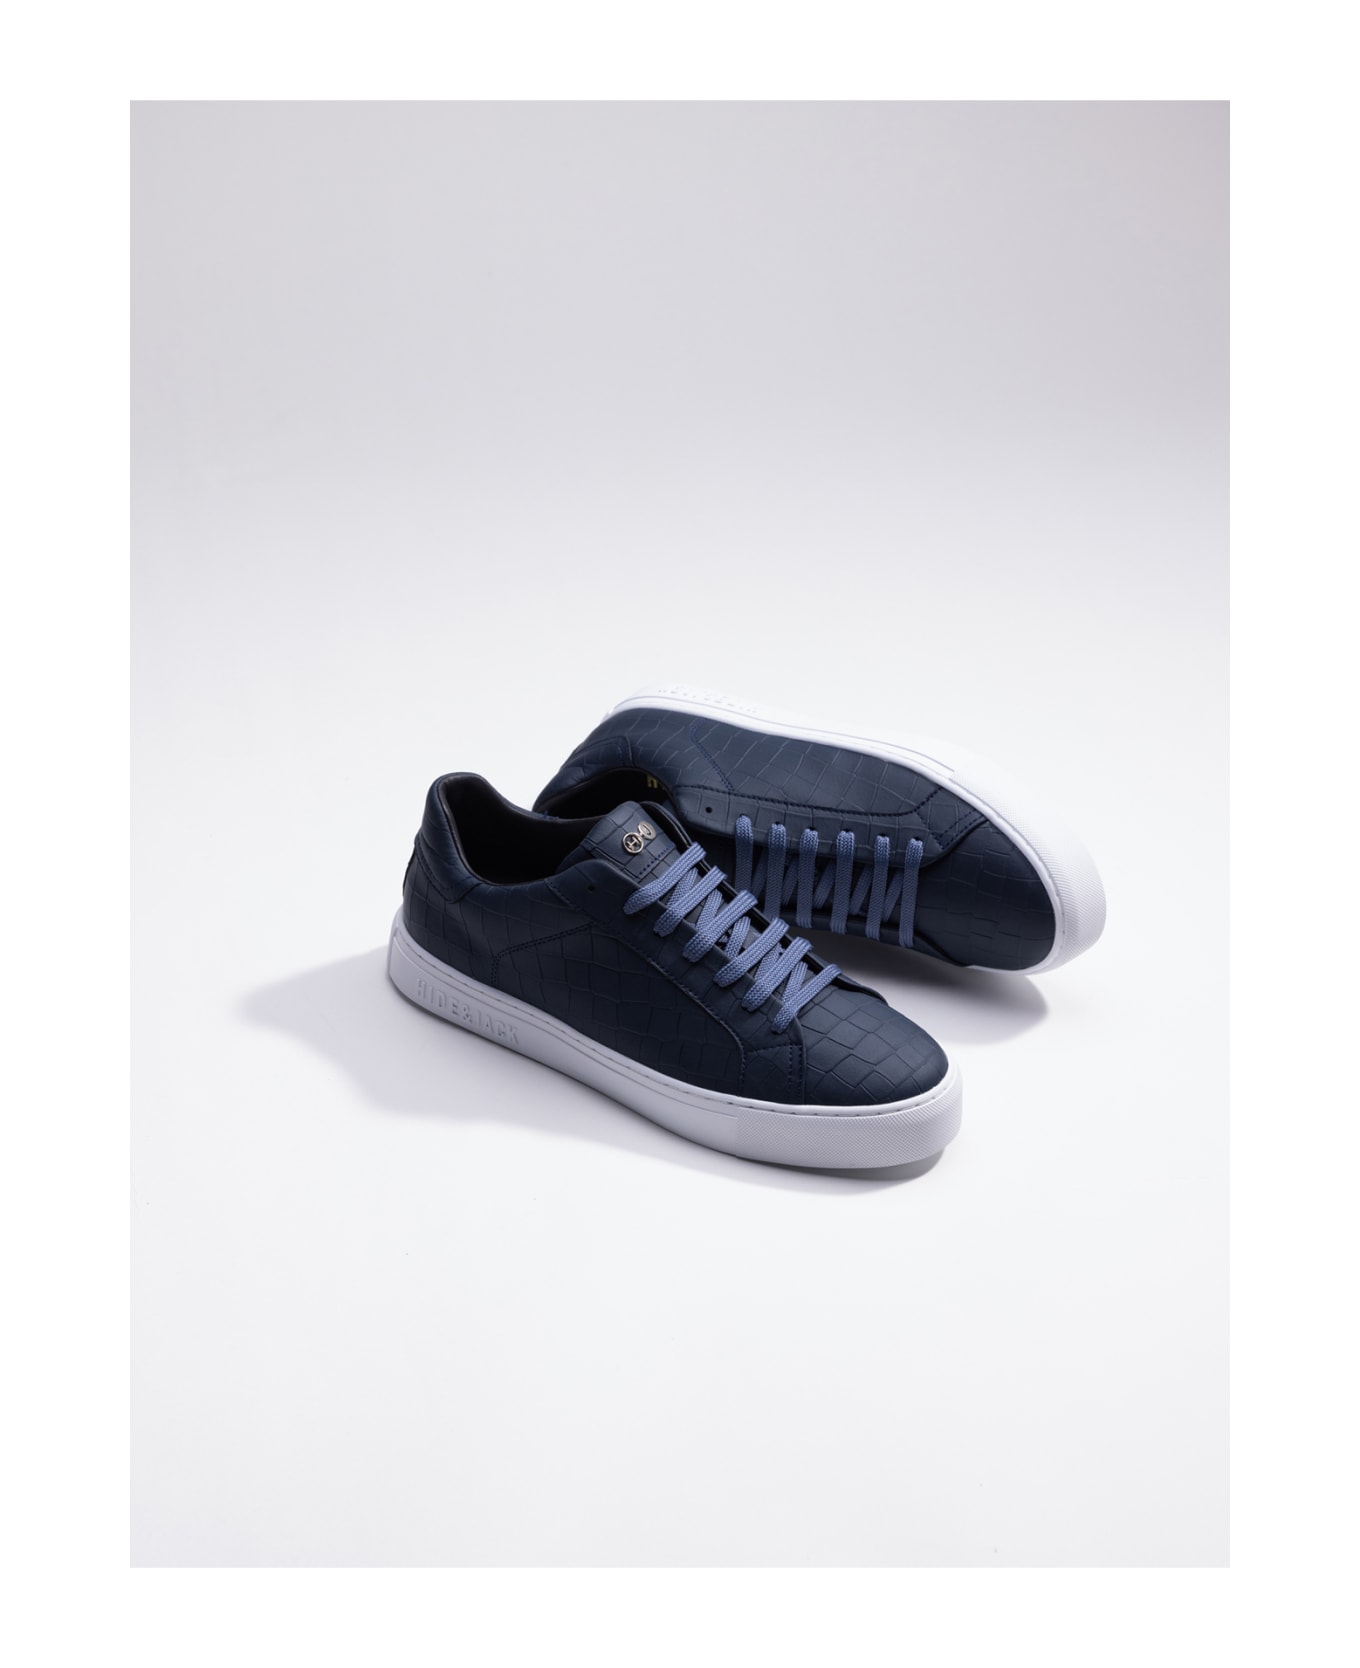 Hide&Jack Low Top Sneaker - Essence Blue White スニーカー